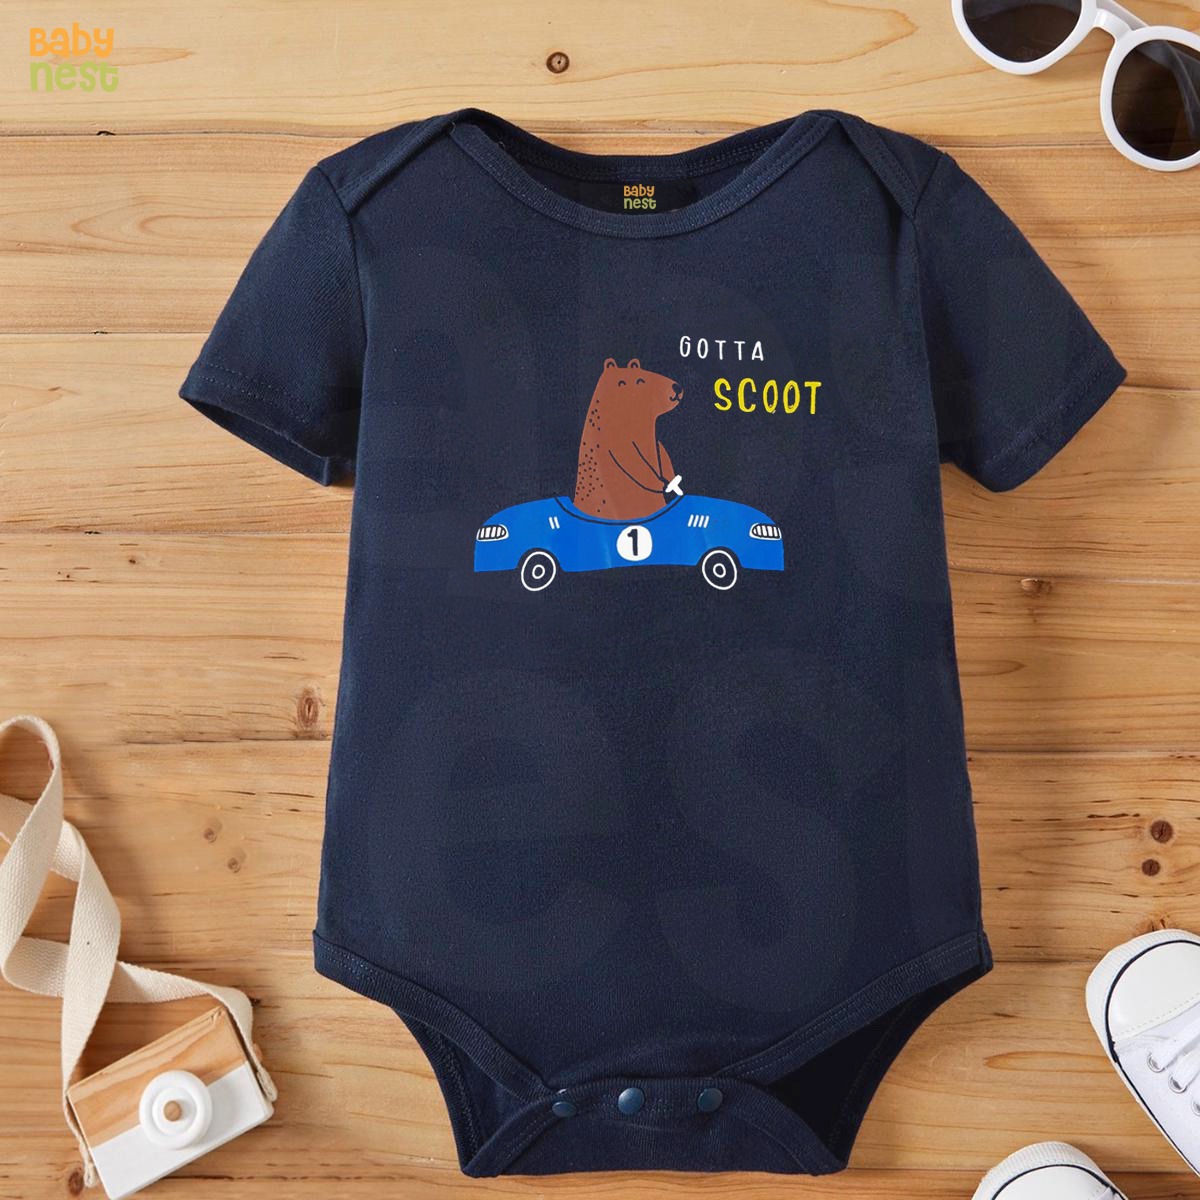 Gotta Scoot – (Blue) RBT 107 Romper For Kids